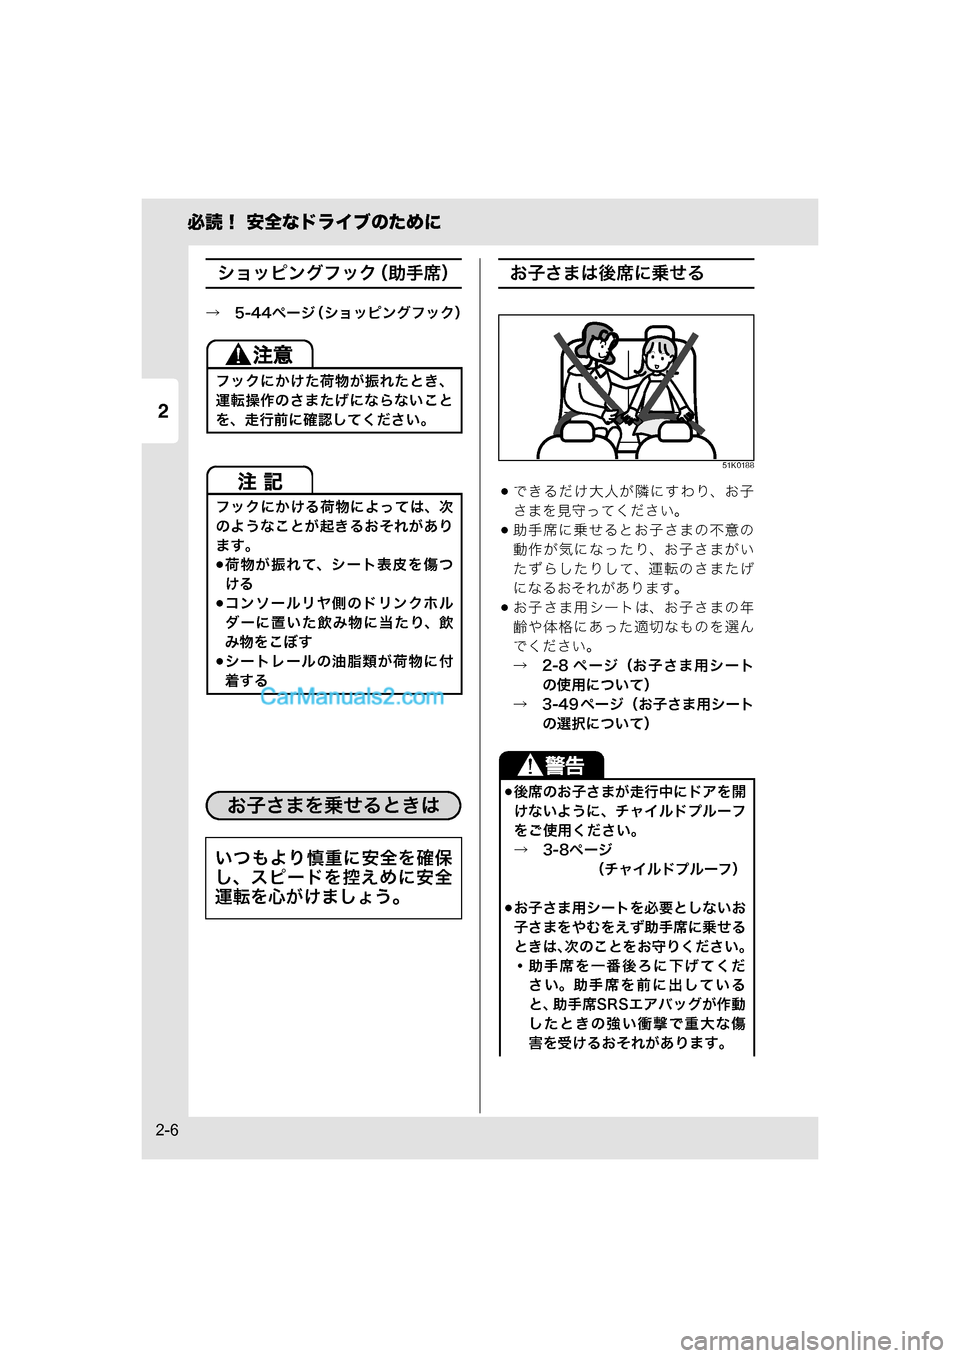 MAZDA MODEL CARROL 2015  取扱説明書 (キャロル) (in Japanese) 2
必読！ 安全なドライブのために
2-6
ショッピングフック（助手席）
→　5-44ページ（ショッピングフック）
お子さまは後席に乗せる
51K0188
できる